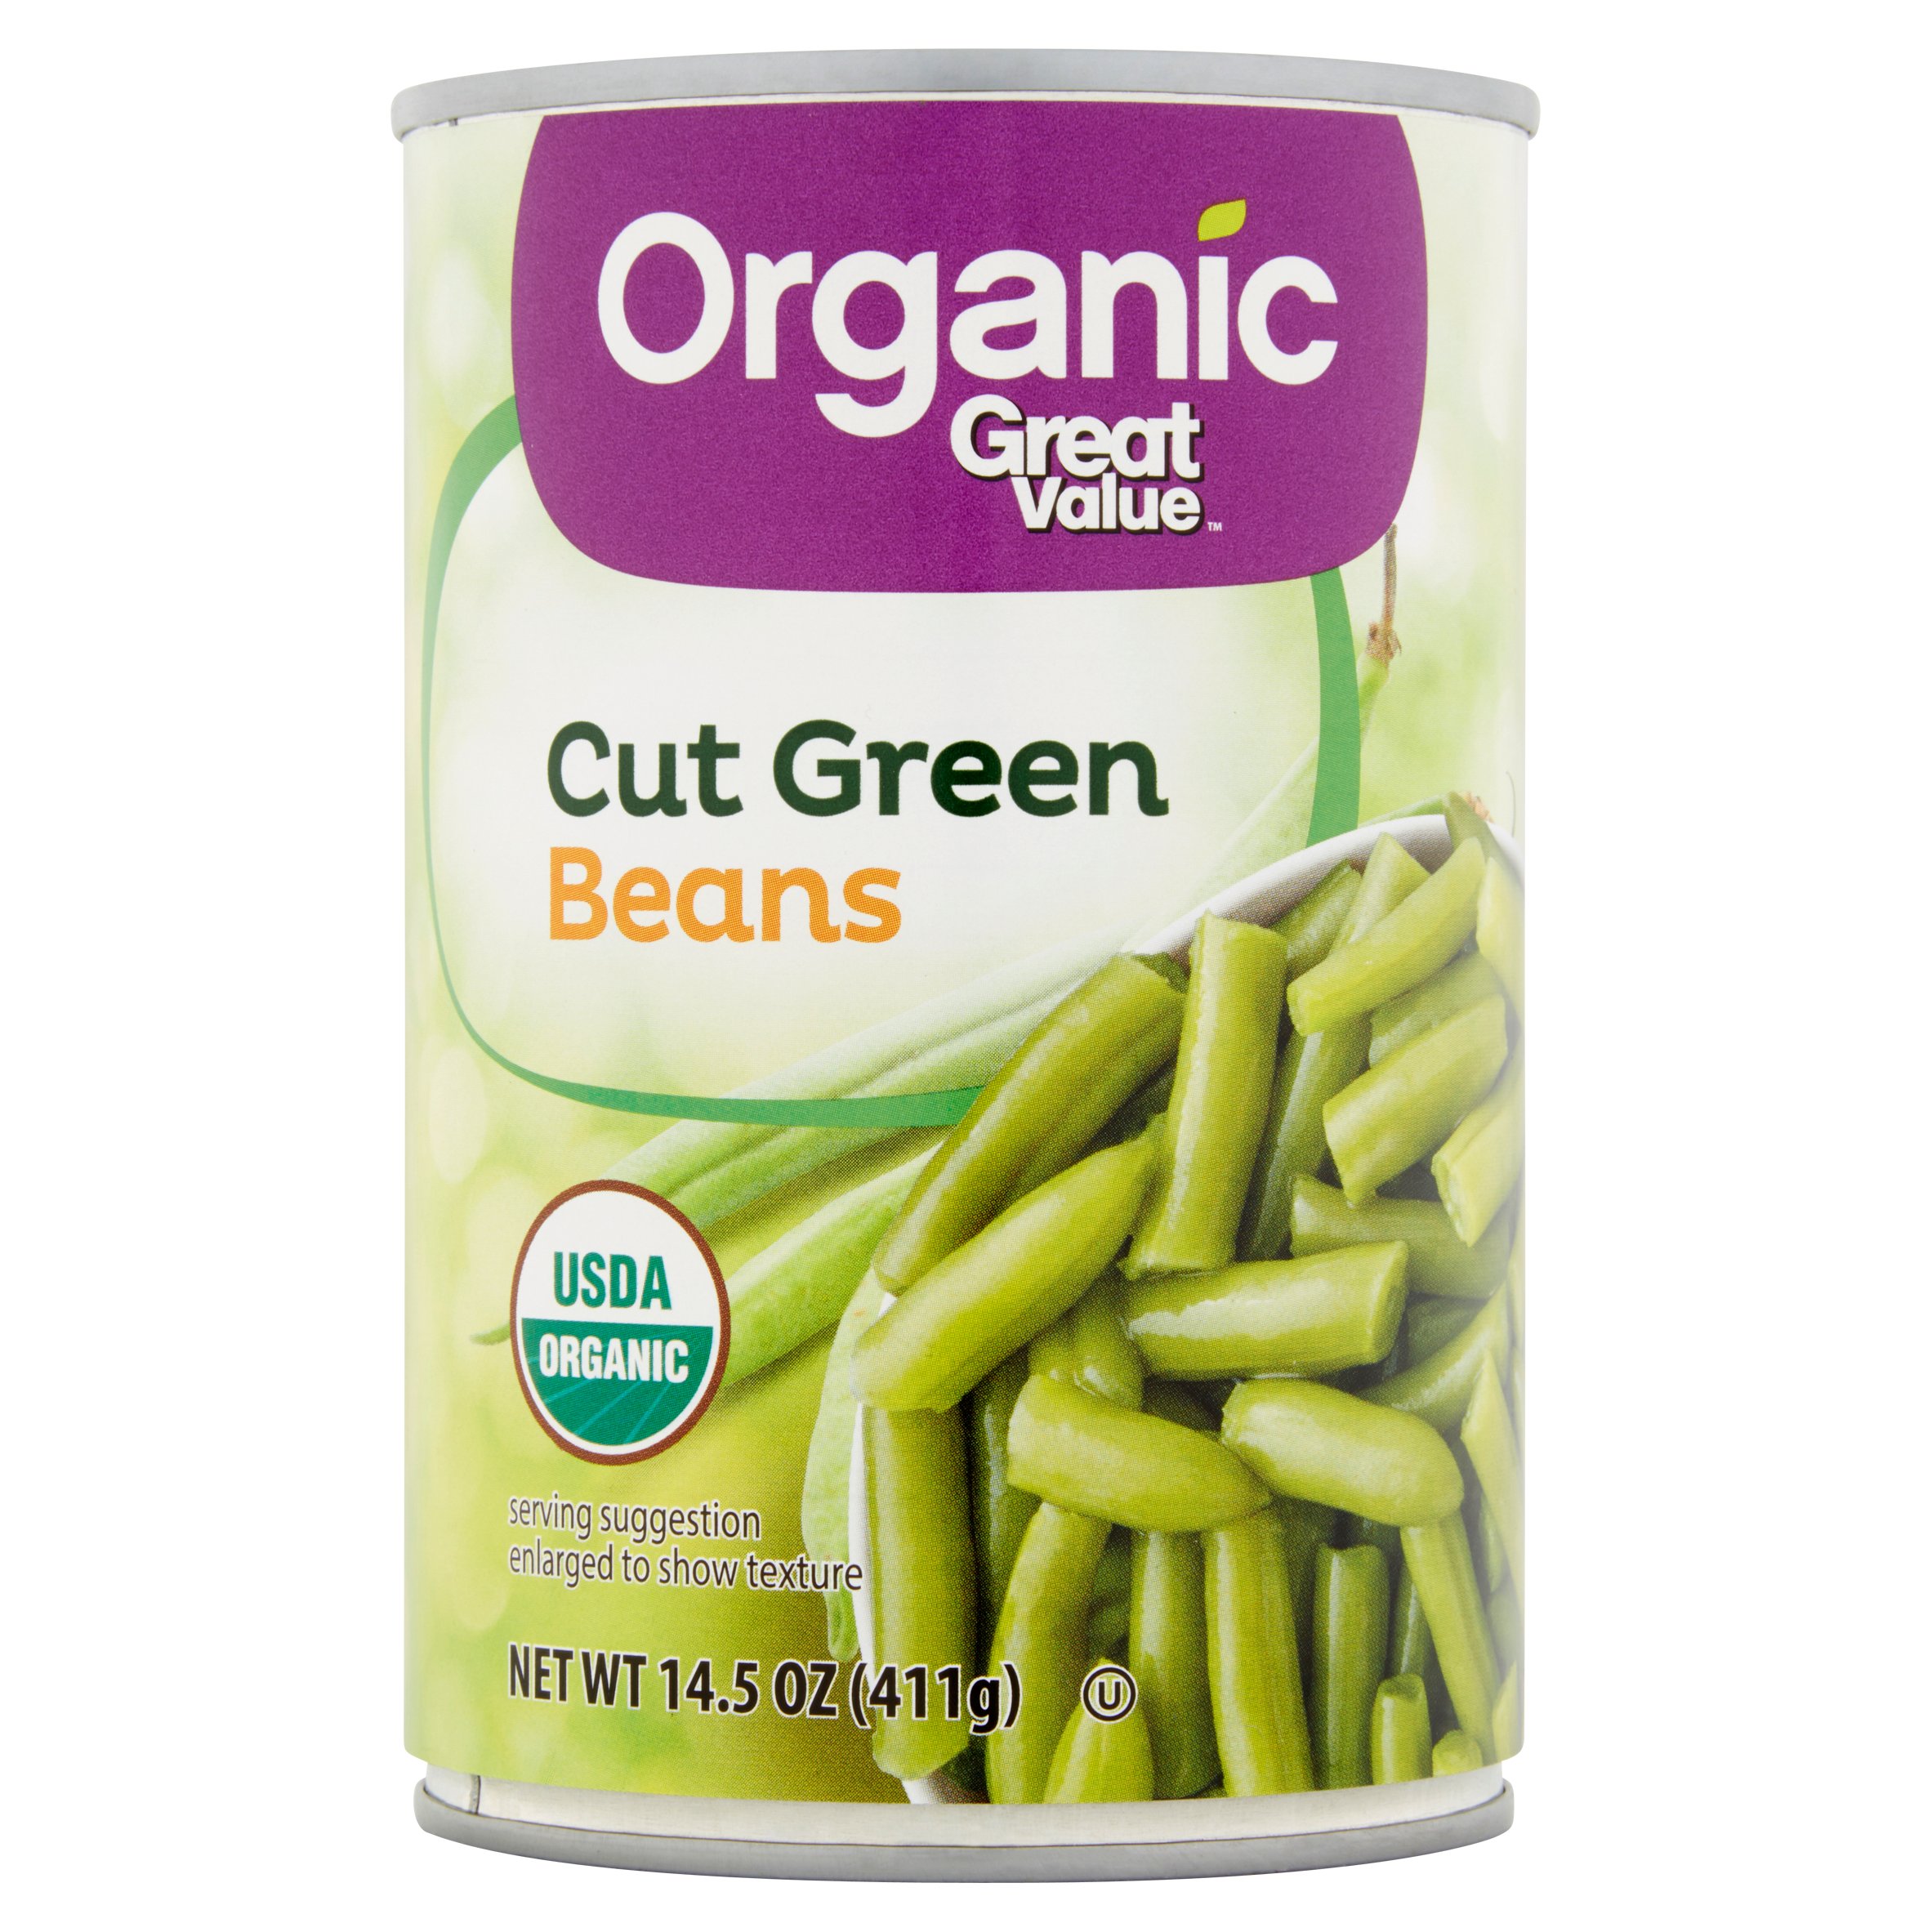 Great Value Organic Cut Green Beans